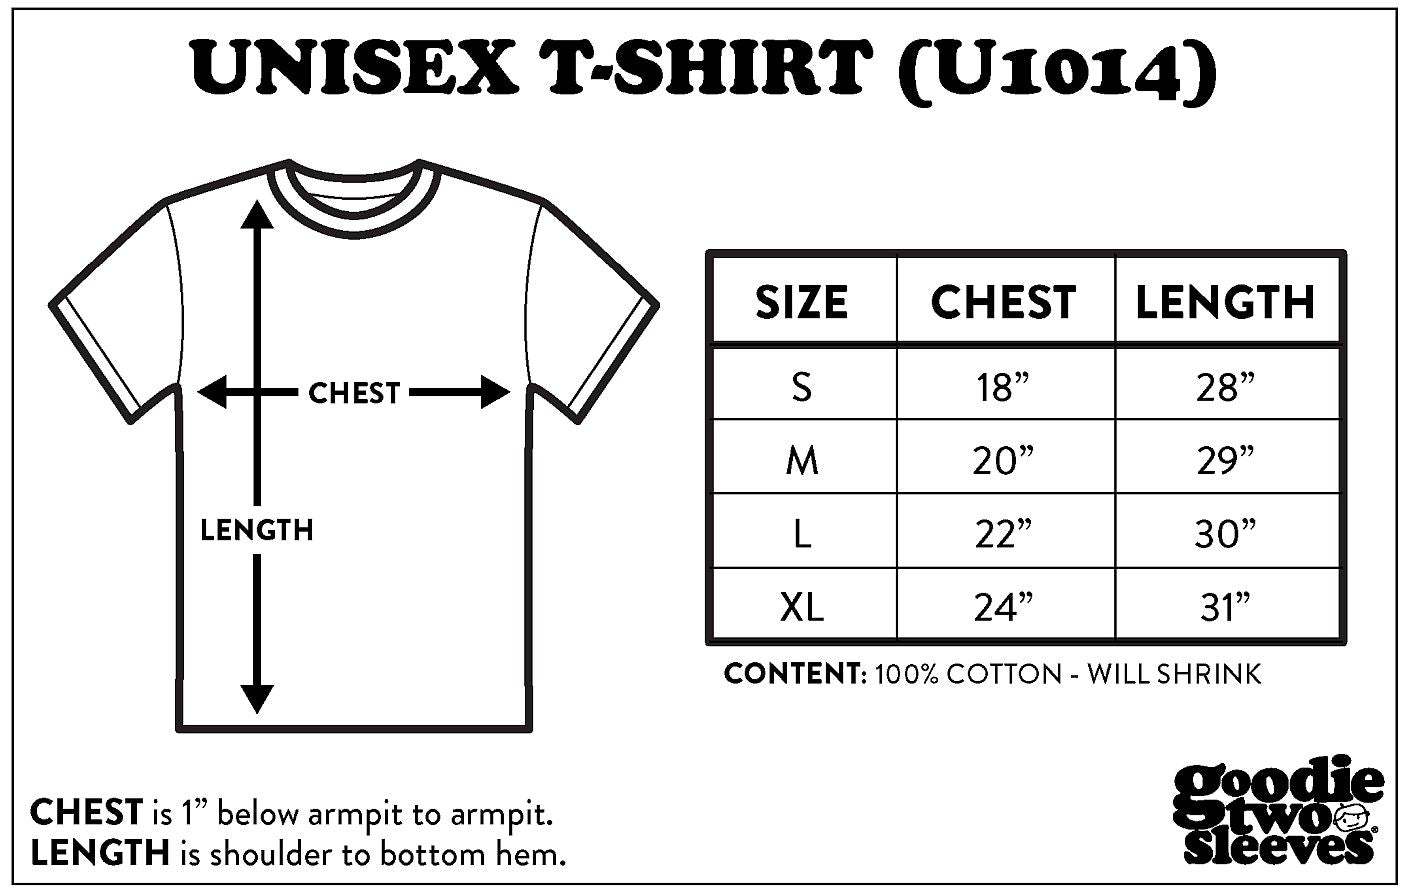 ACDC World Tour 77 Unisex T-Shirt